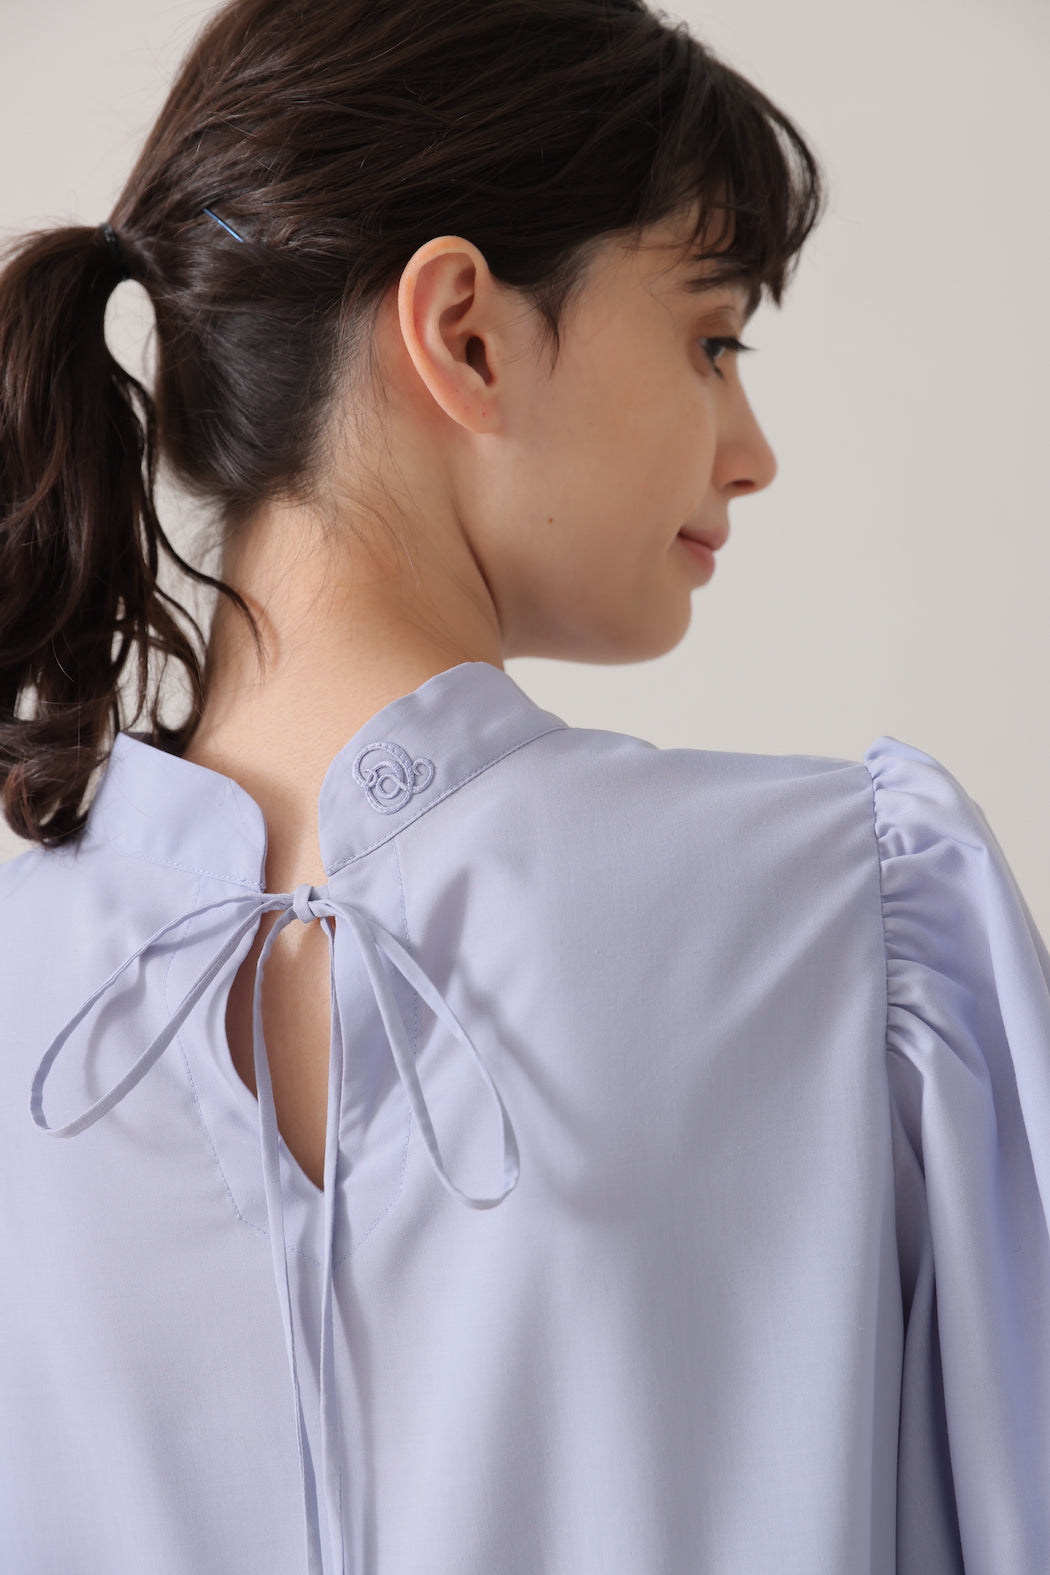 Audire switch blouse (Light blue)